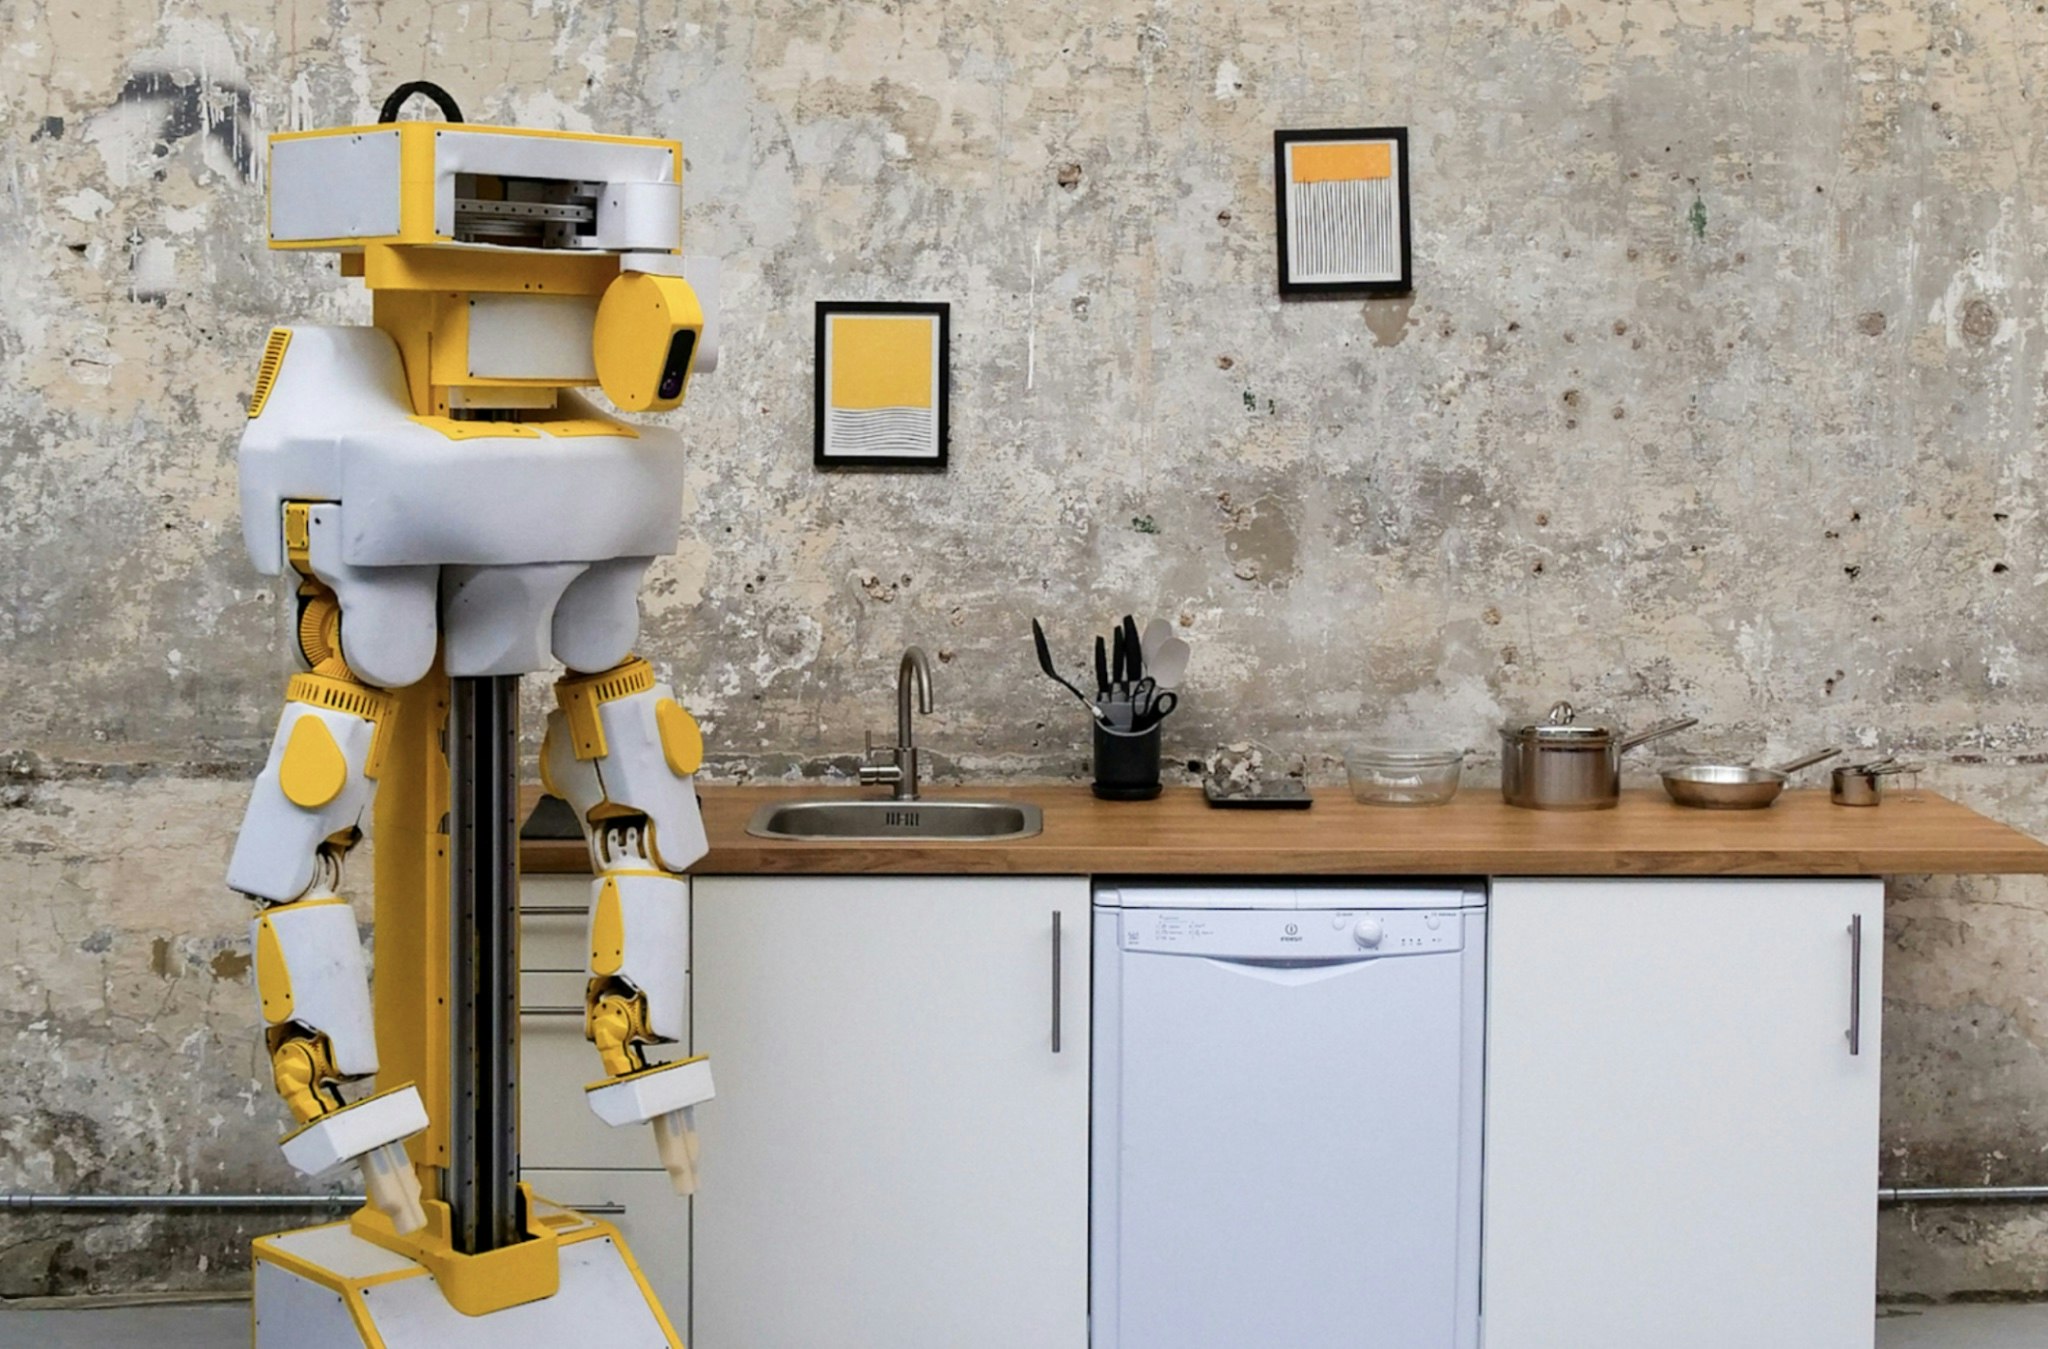 An image of Prosper's robot next to a kitchen worktop